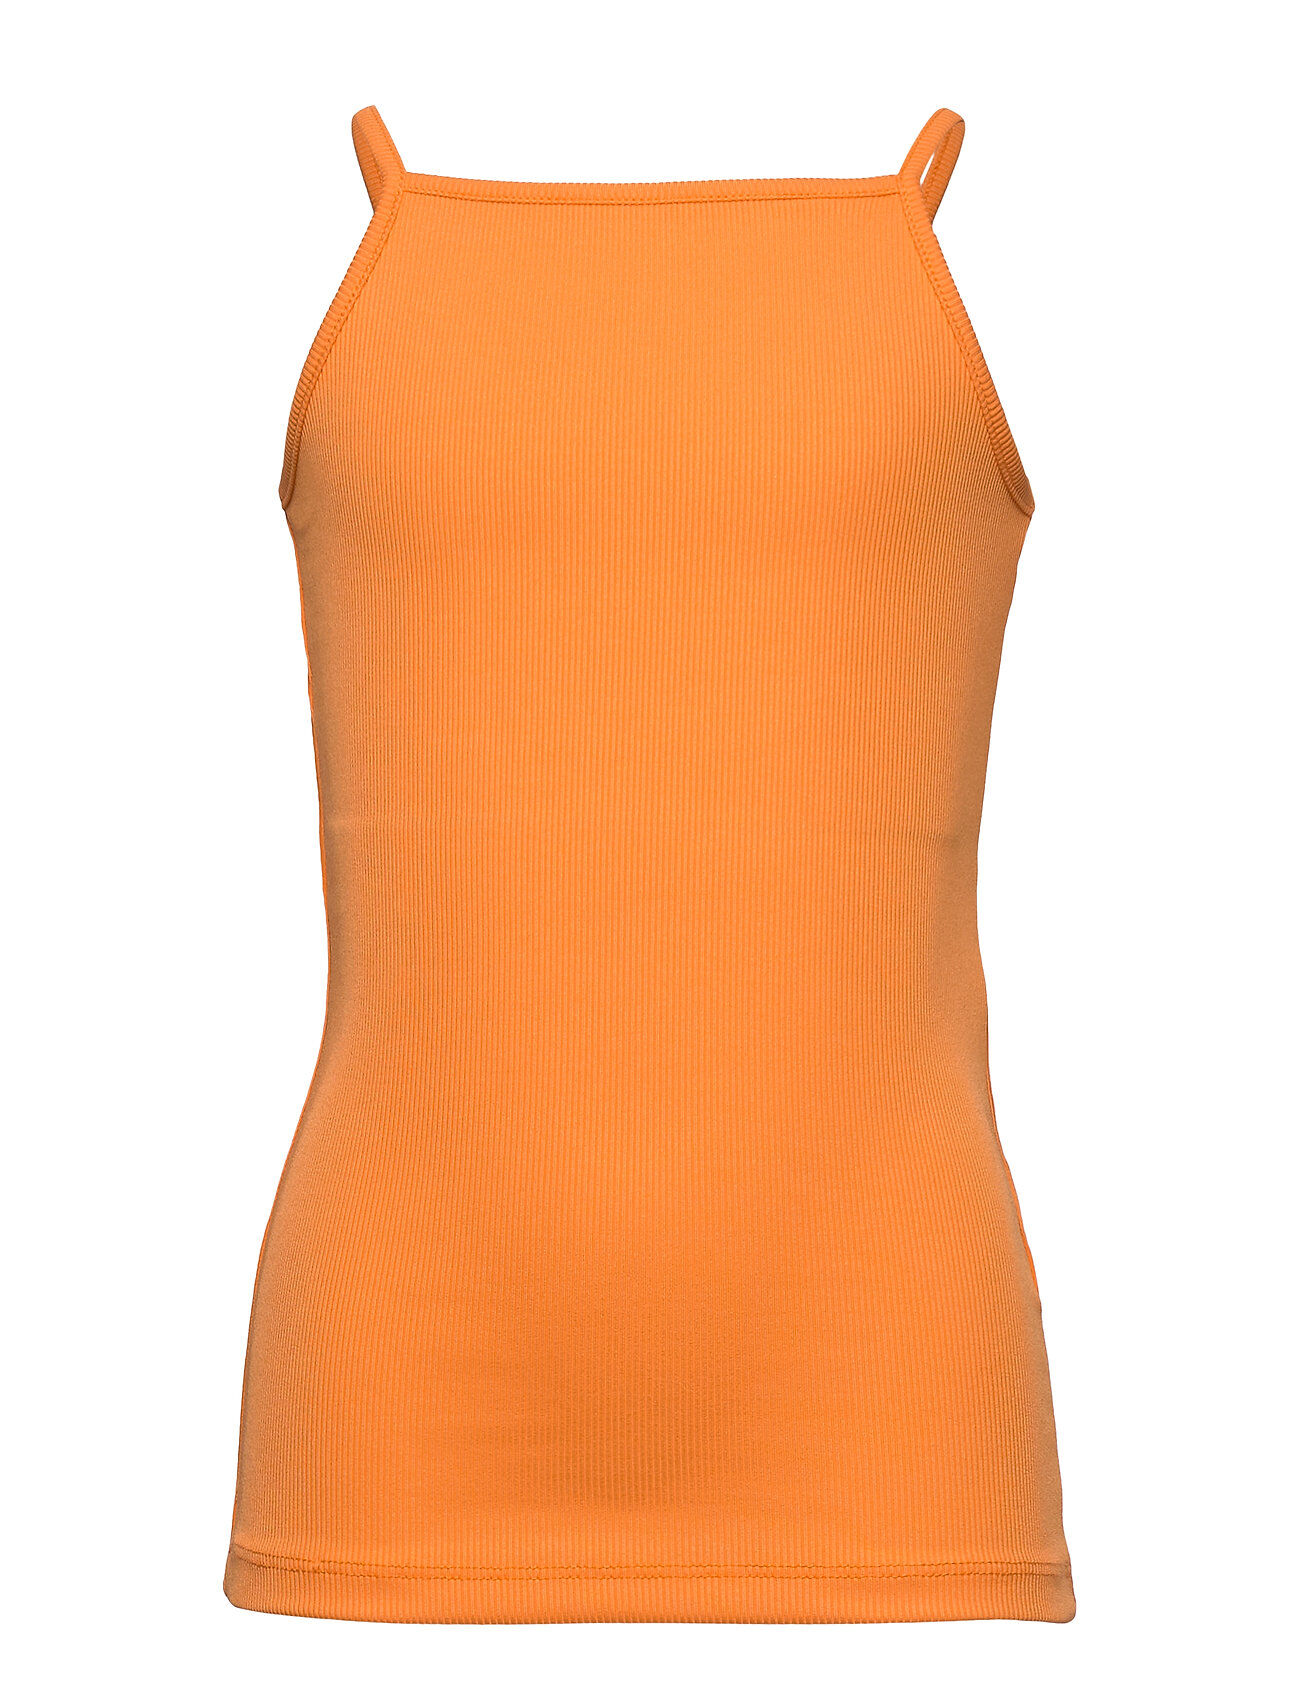 Costbart Iva Strap Top T-shirts Sleeveless Oransje Costbart